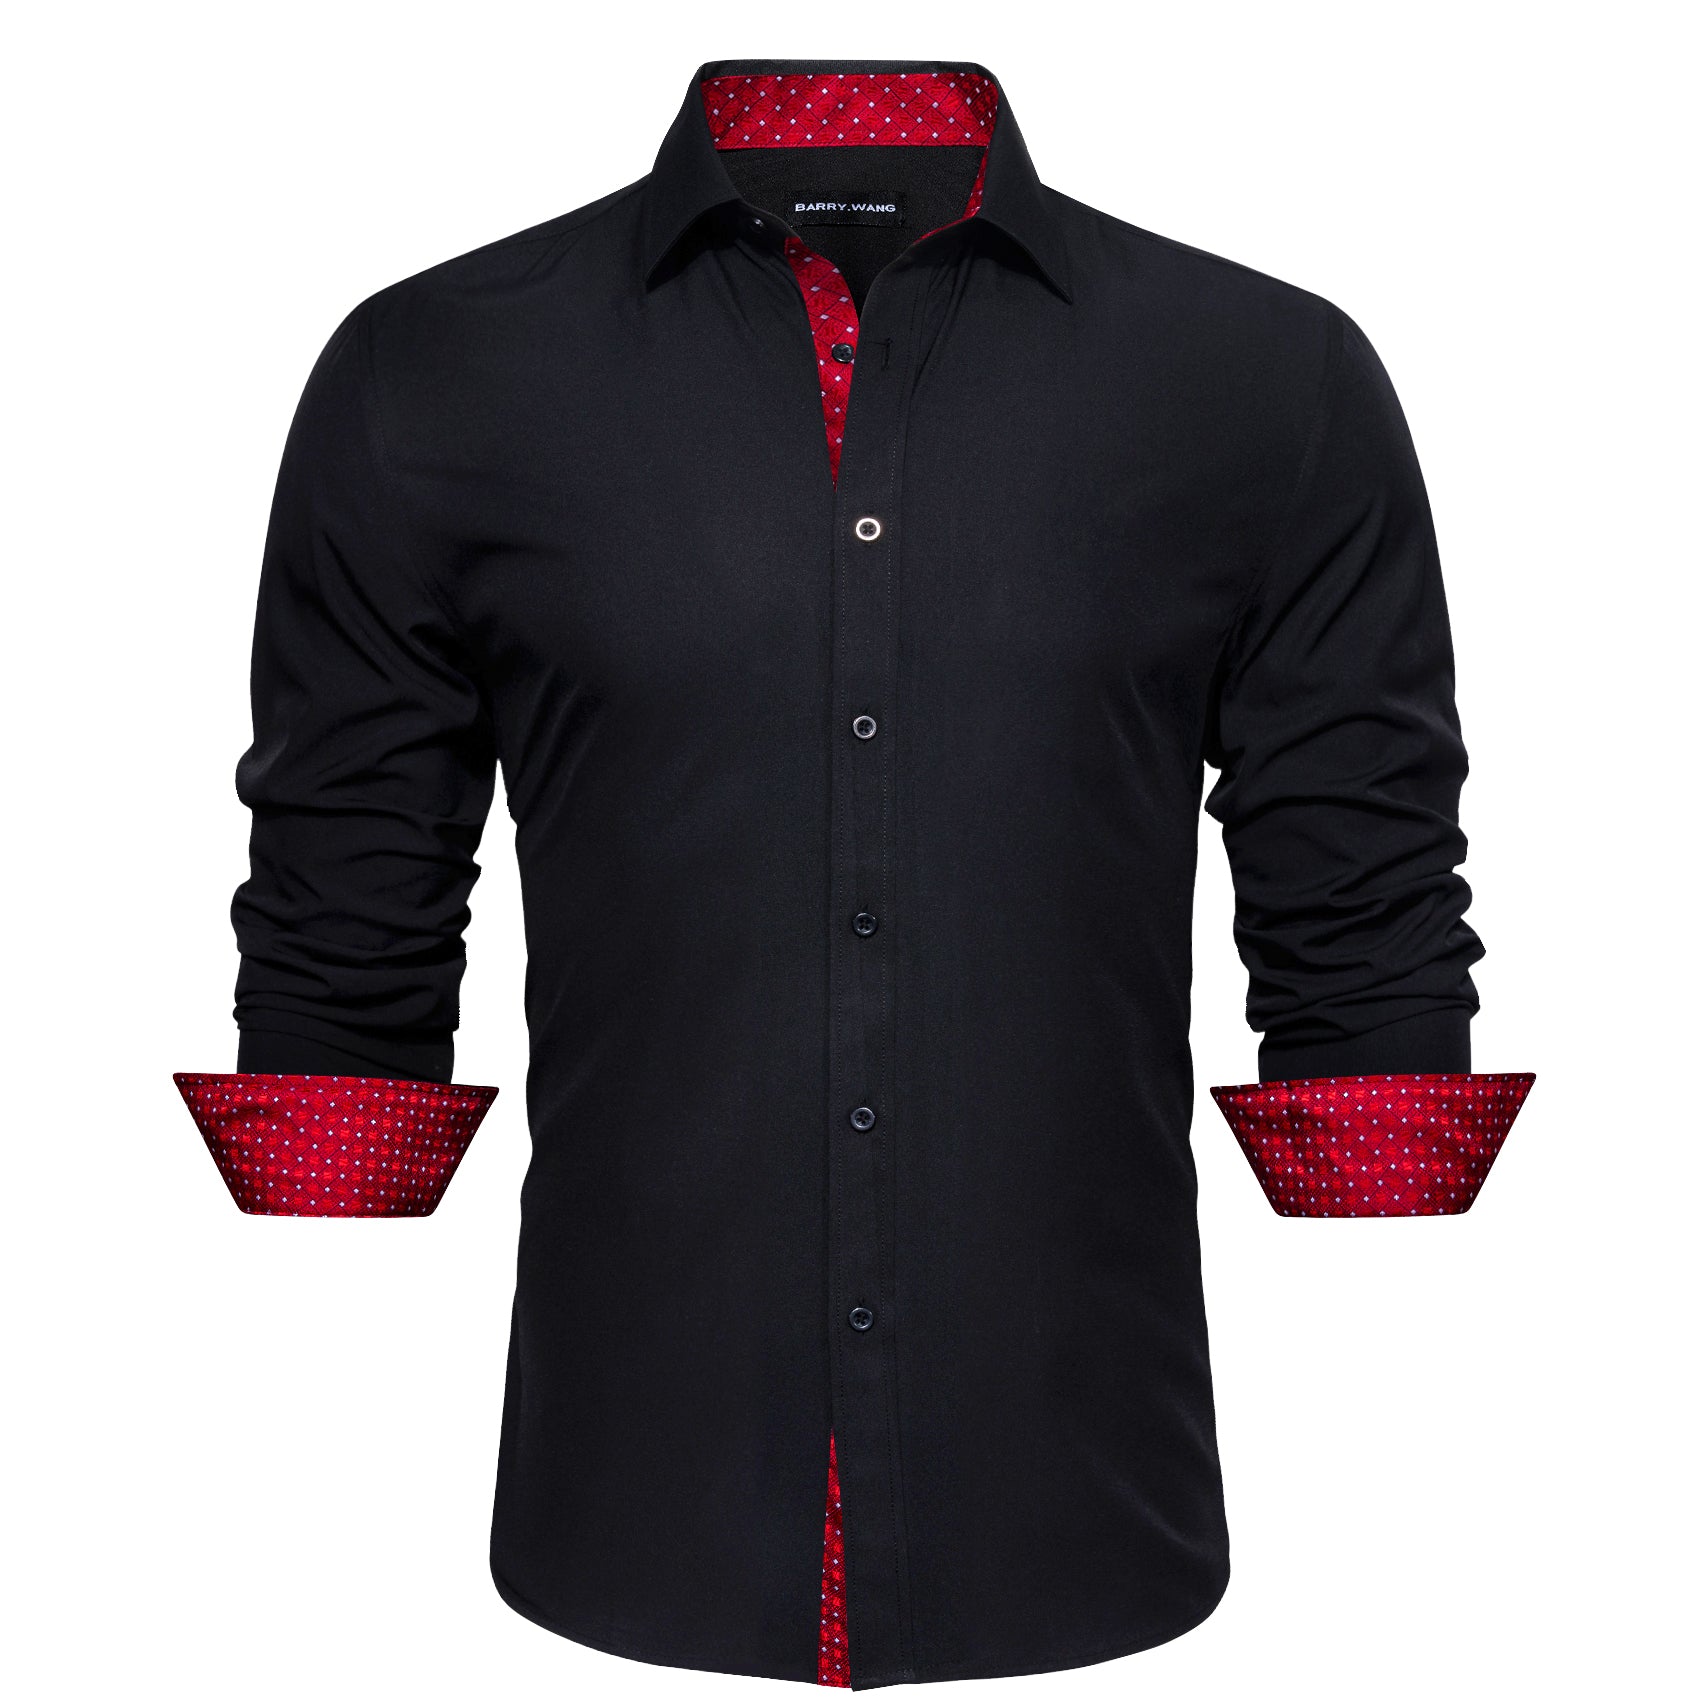 Barry.wang Formal Black Red Splicing Men's Business Shirt